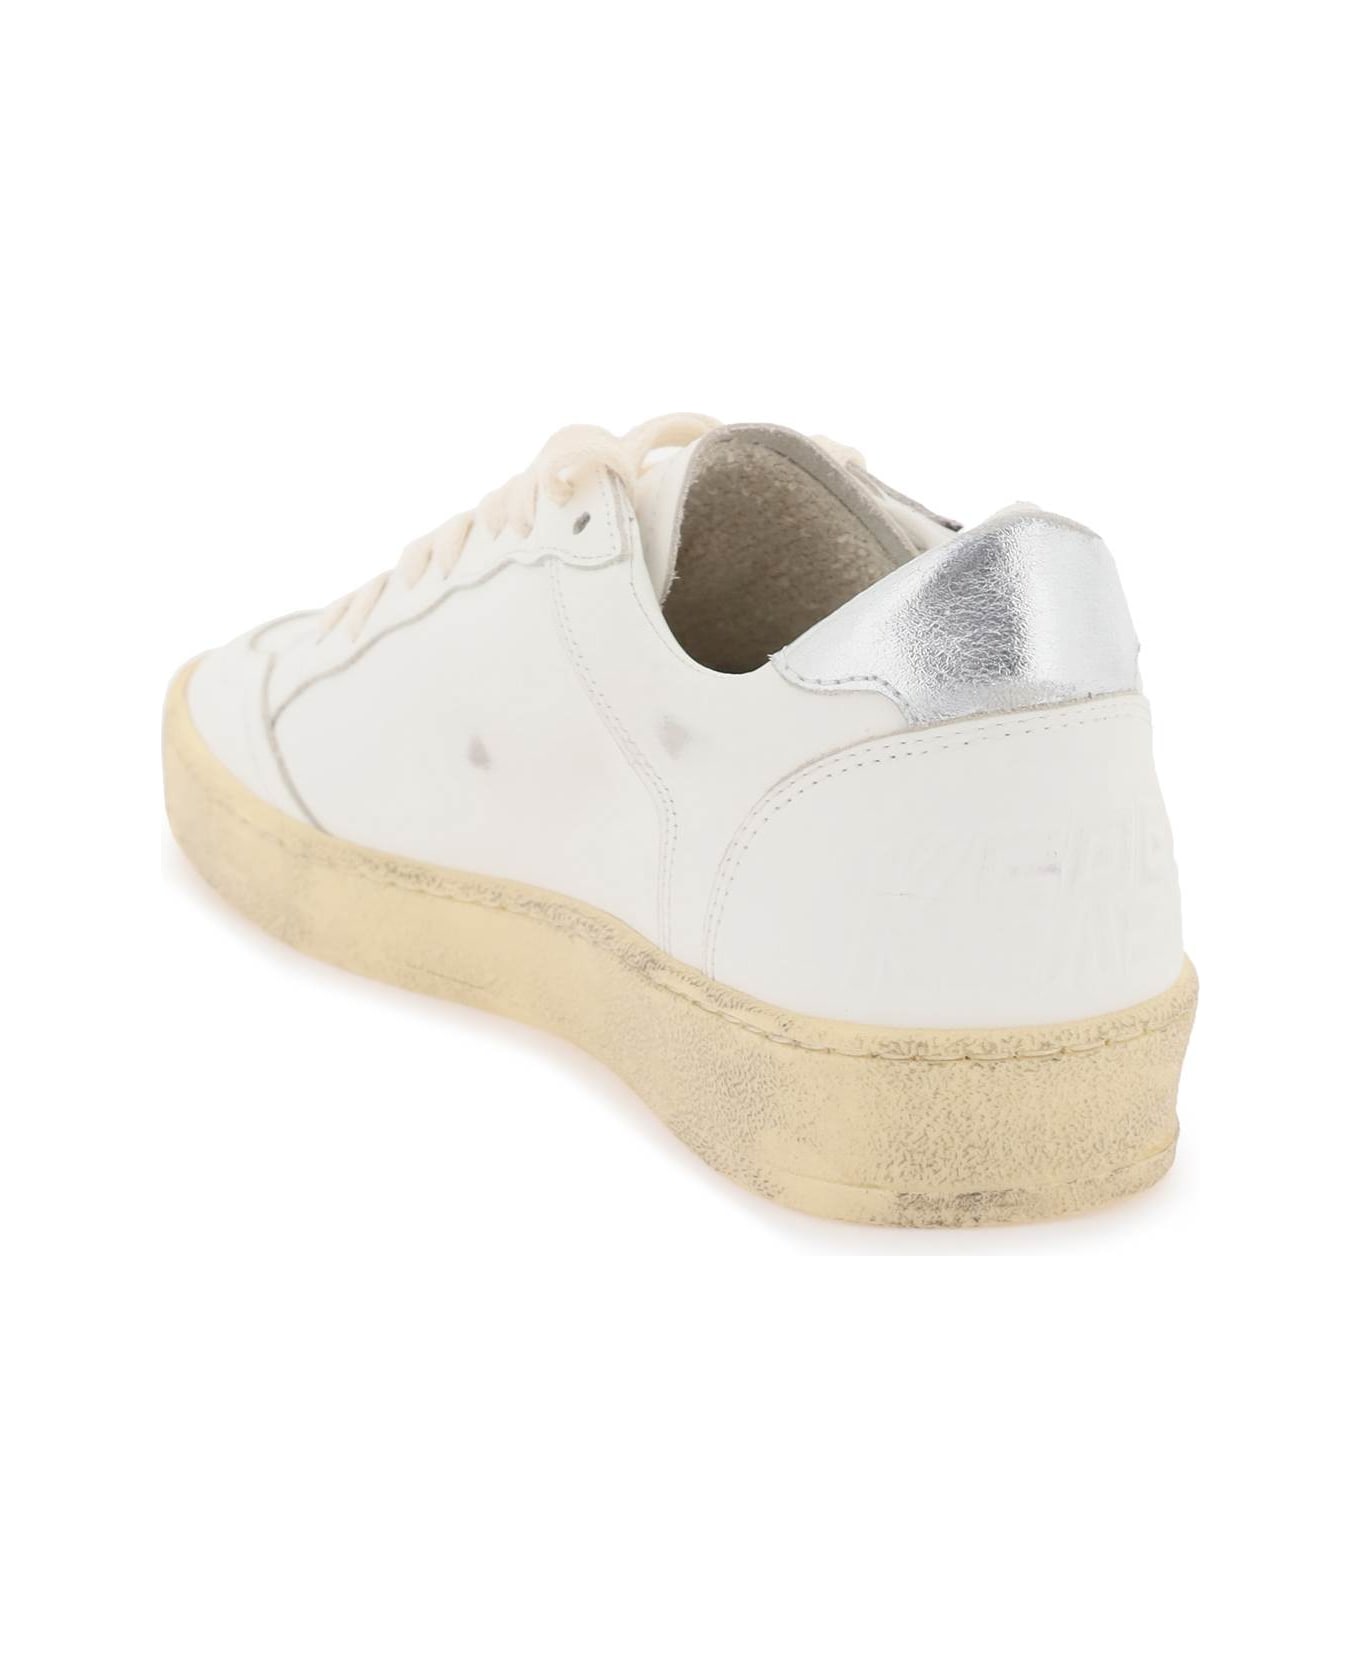 Golden Goose Ball Star Sneakers - WHITE ICE SILVER (White)